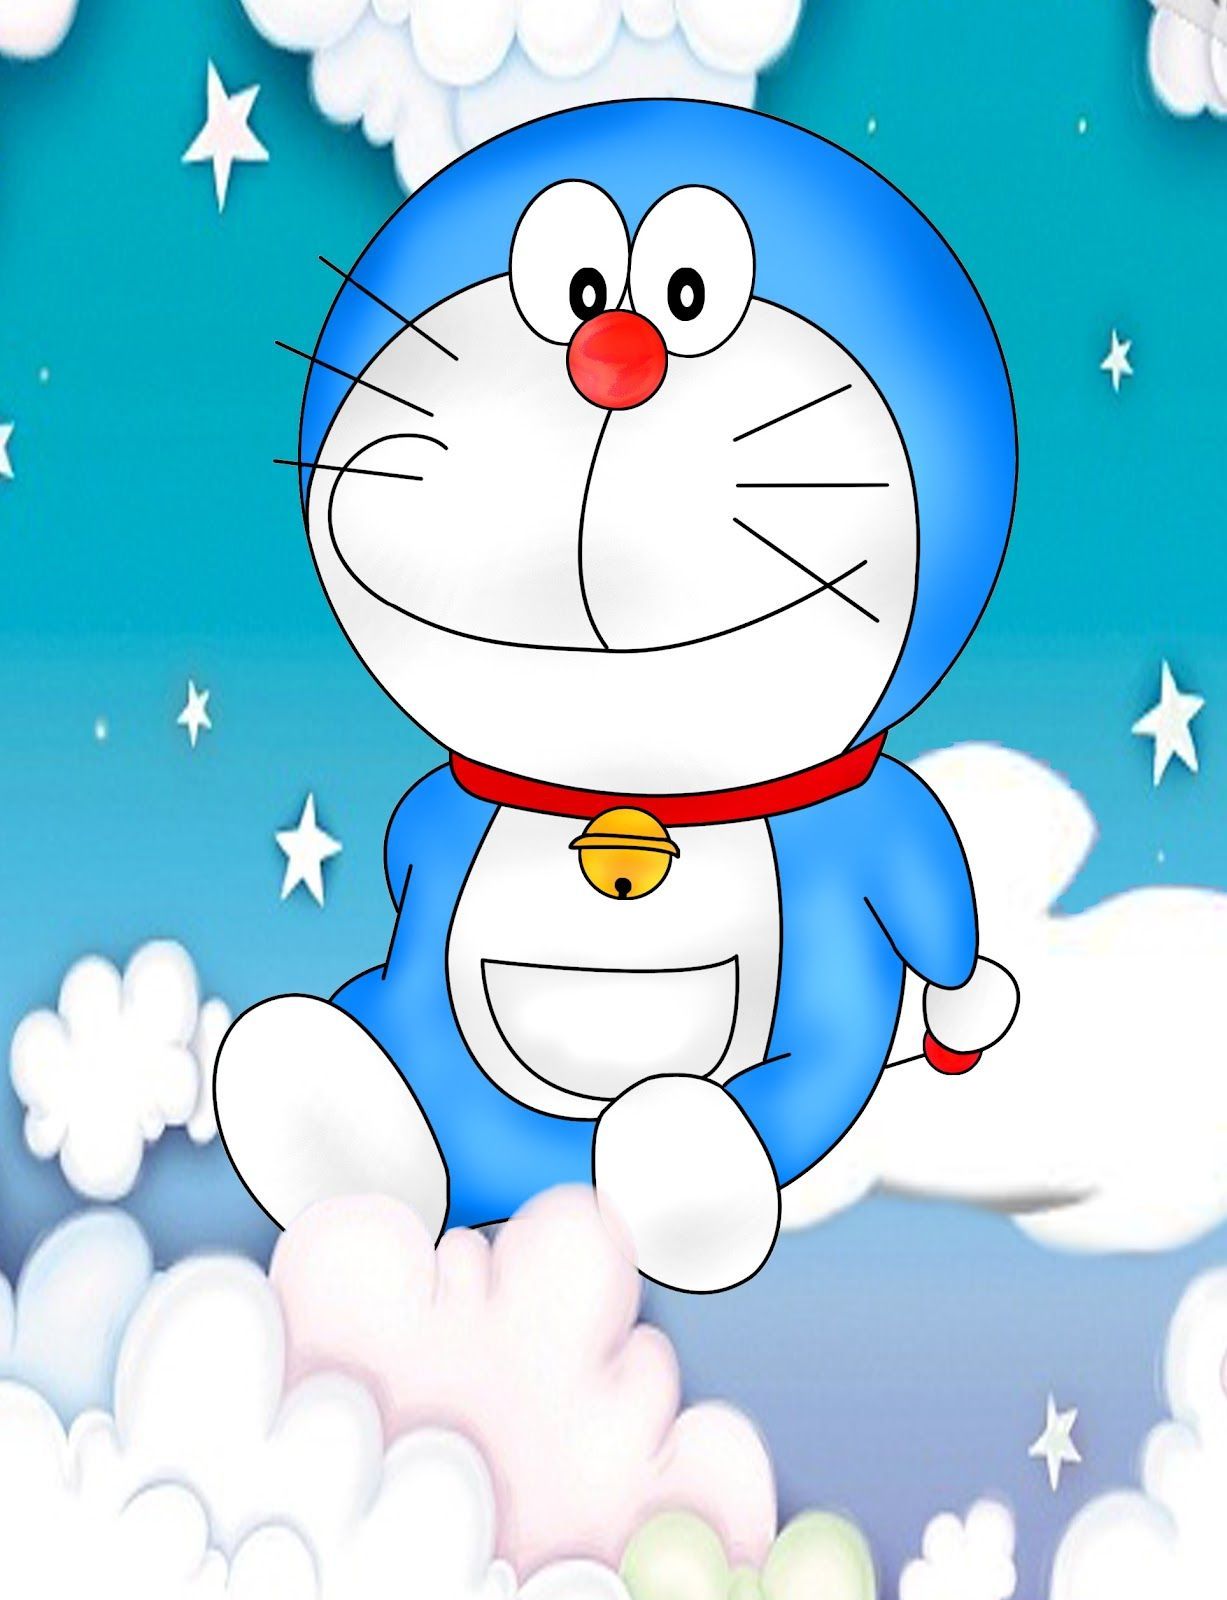 Doraemon 2021 Wallpapers - Wallpaper Cave